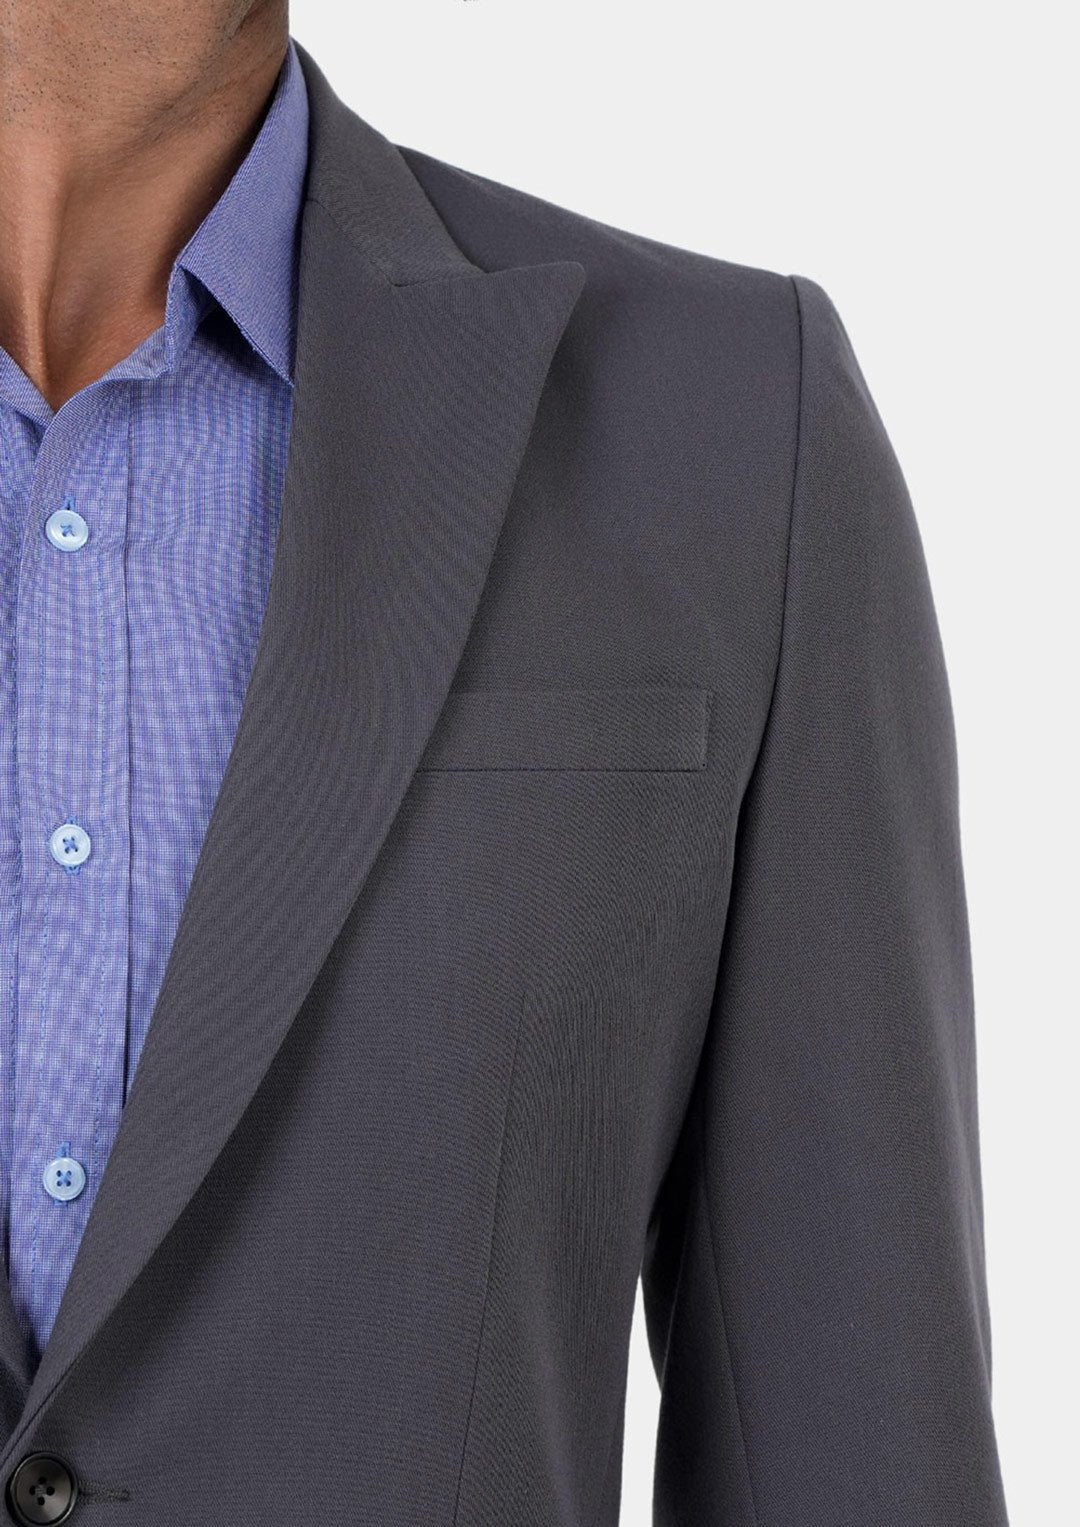 Bryant Shadow Grey Cotton Suit - SARTORO